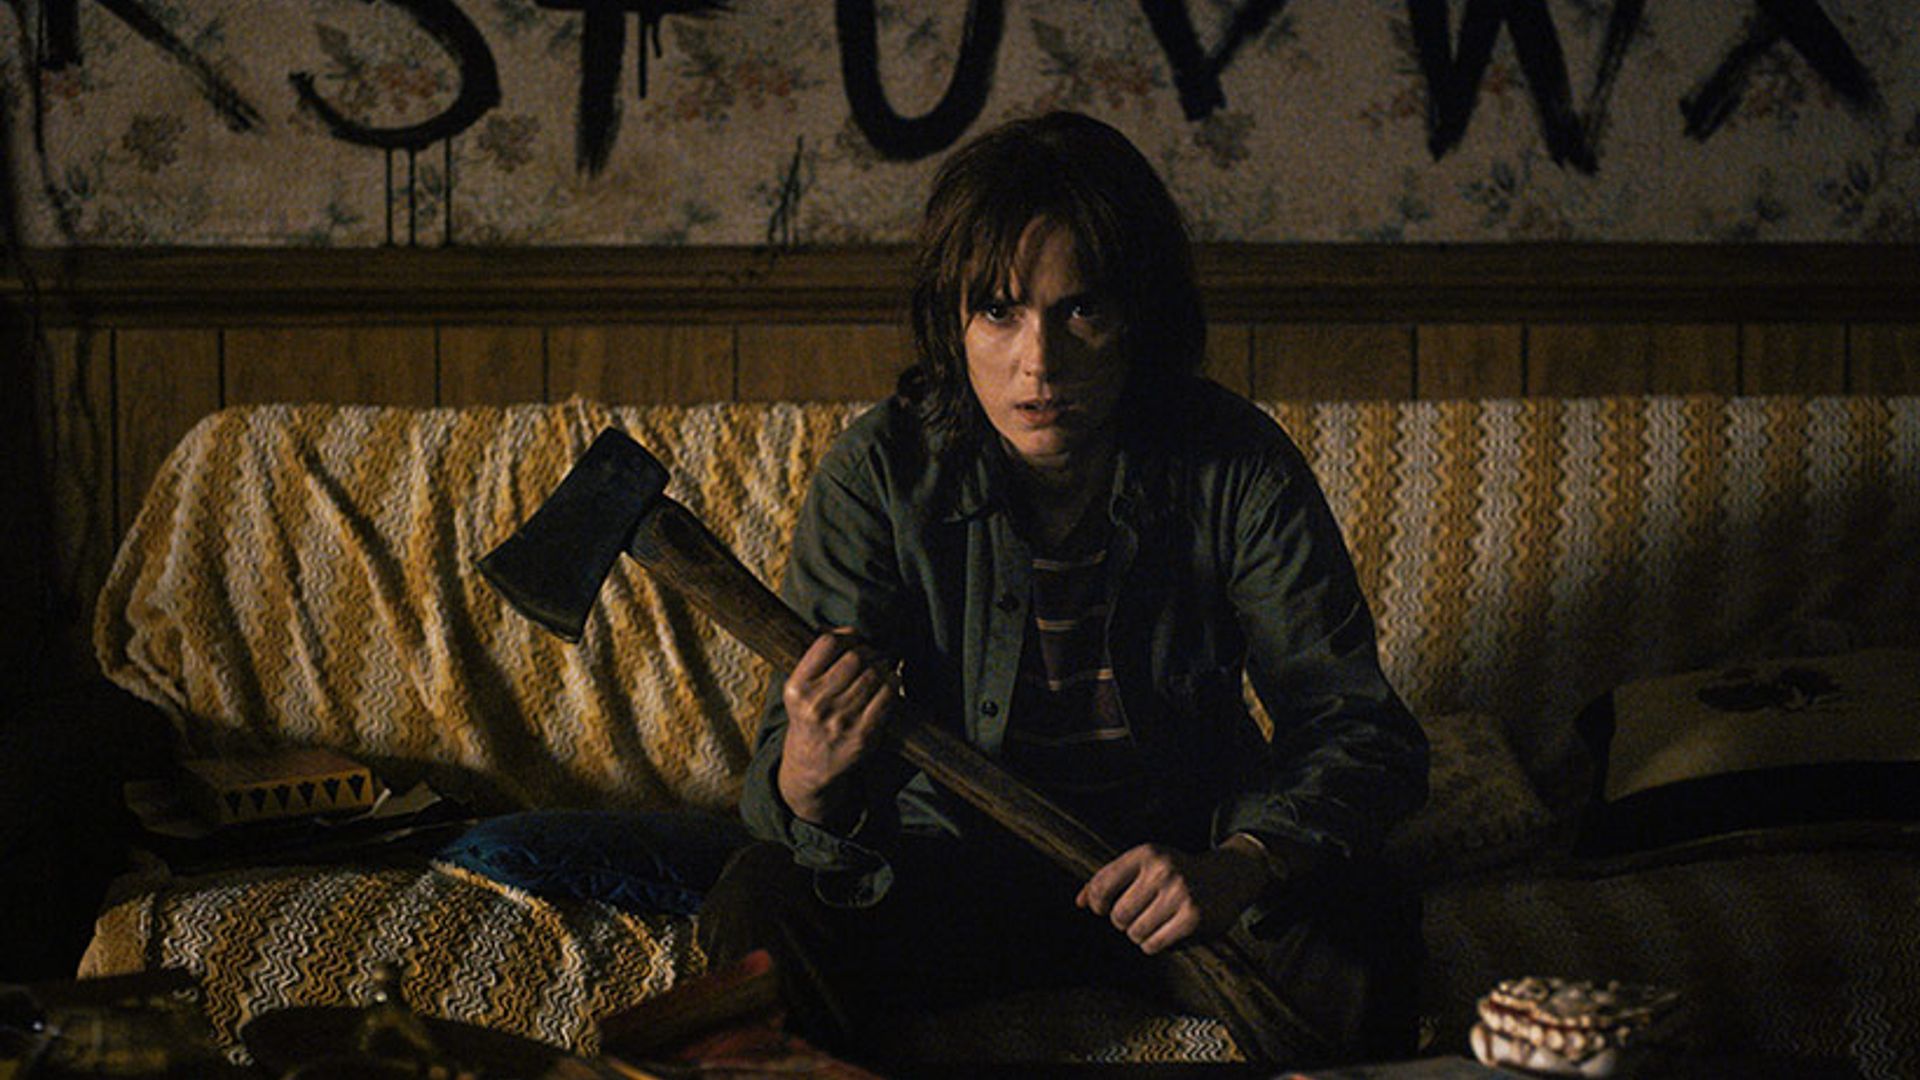 Winona Ryder stars in trailer for spooky new Netflix show, Stranger Things